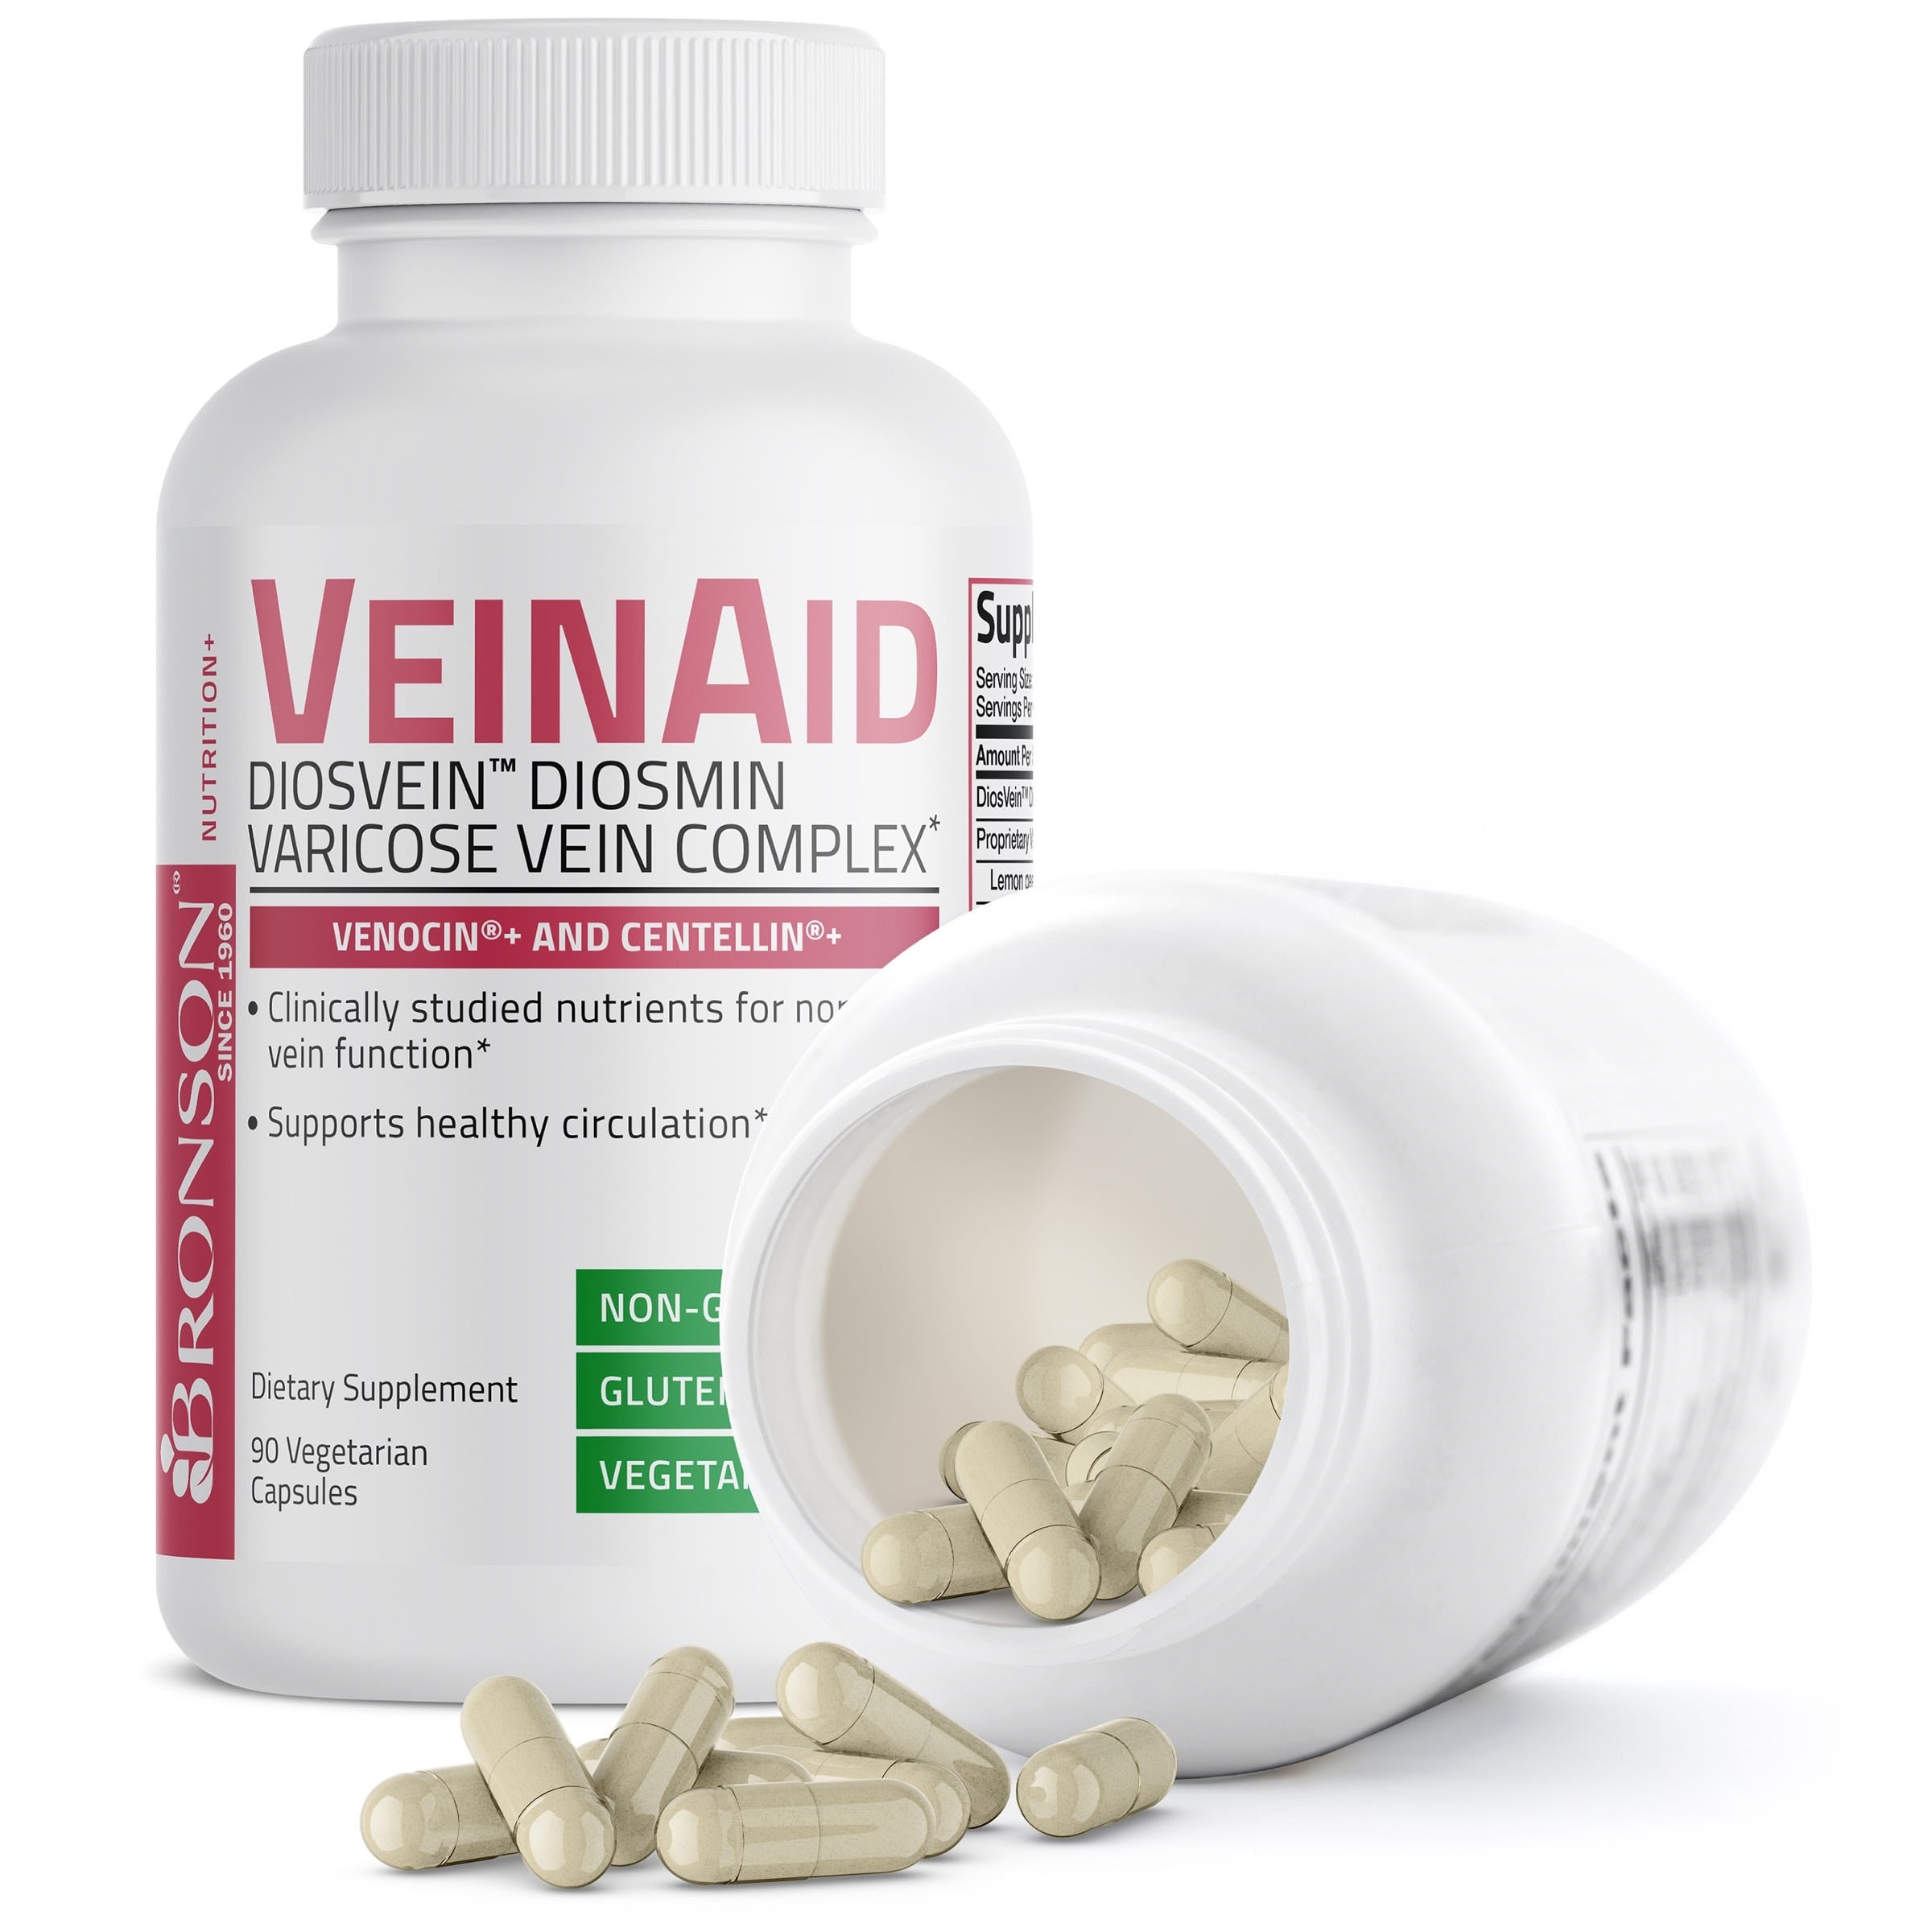 VeinAid DiosVein™ Diosmin Varicose Vein Complex - 90 Vegetarian Capsules view 4 of 6